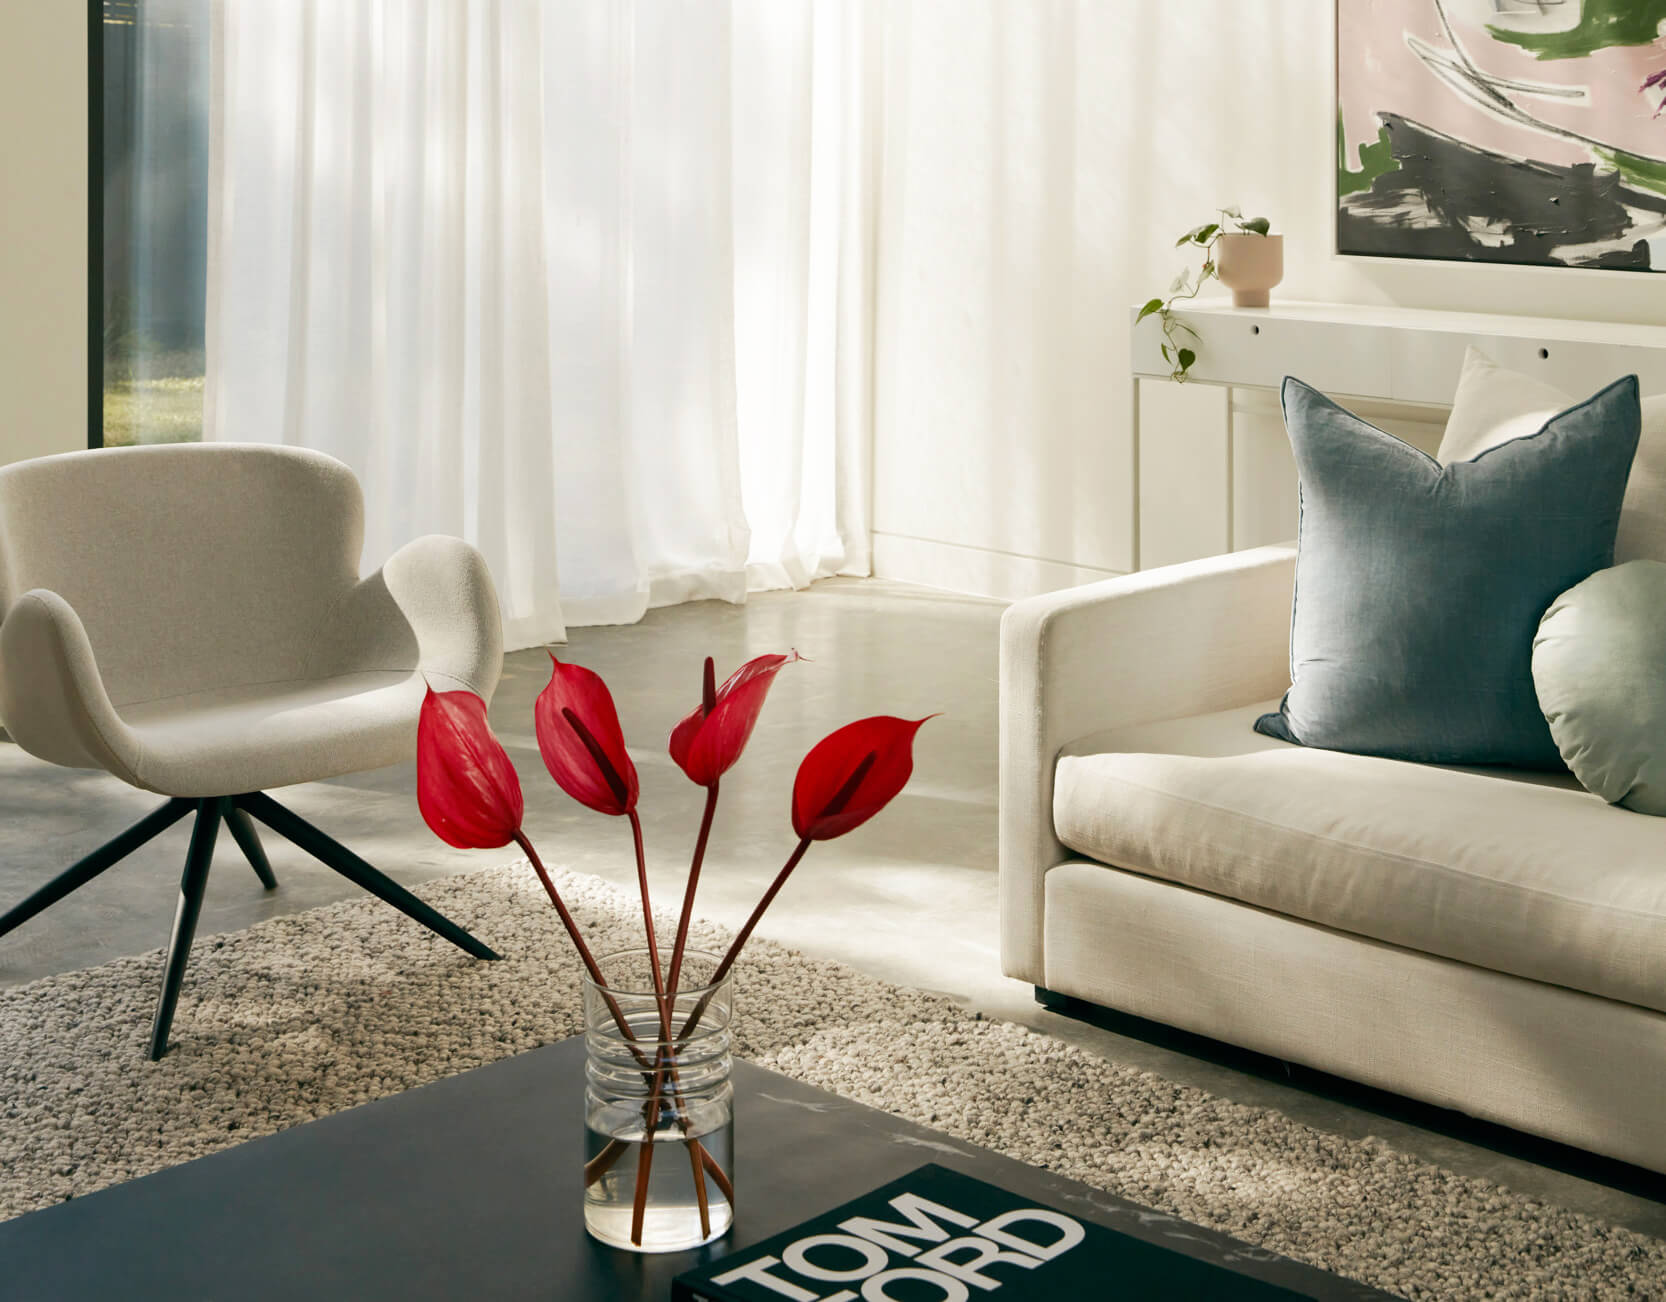 Affordable Home Interior Design Services Melbourne